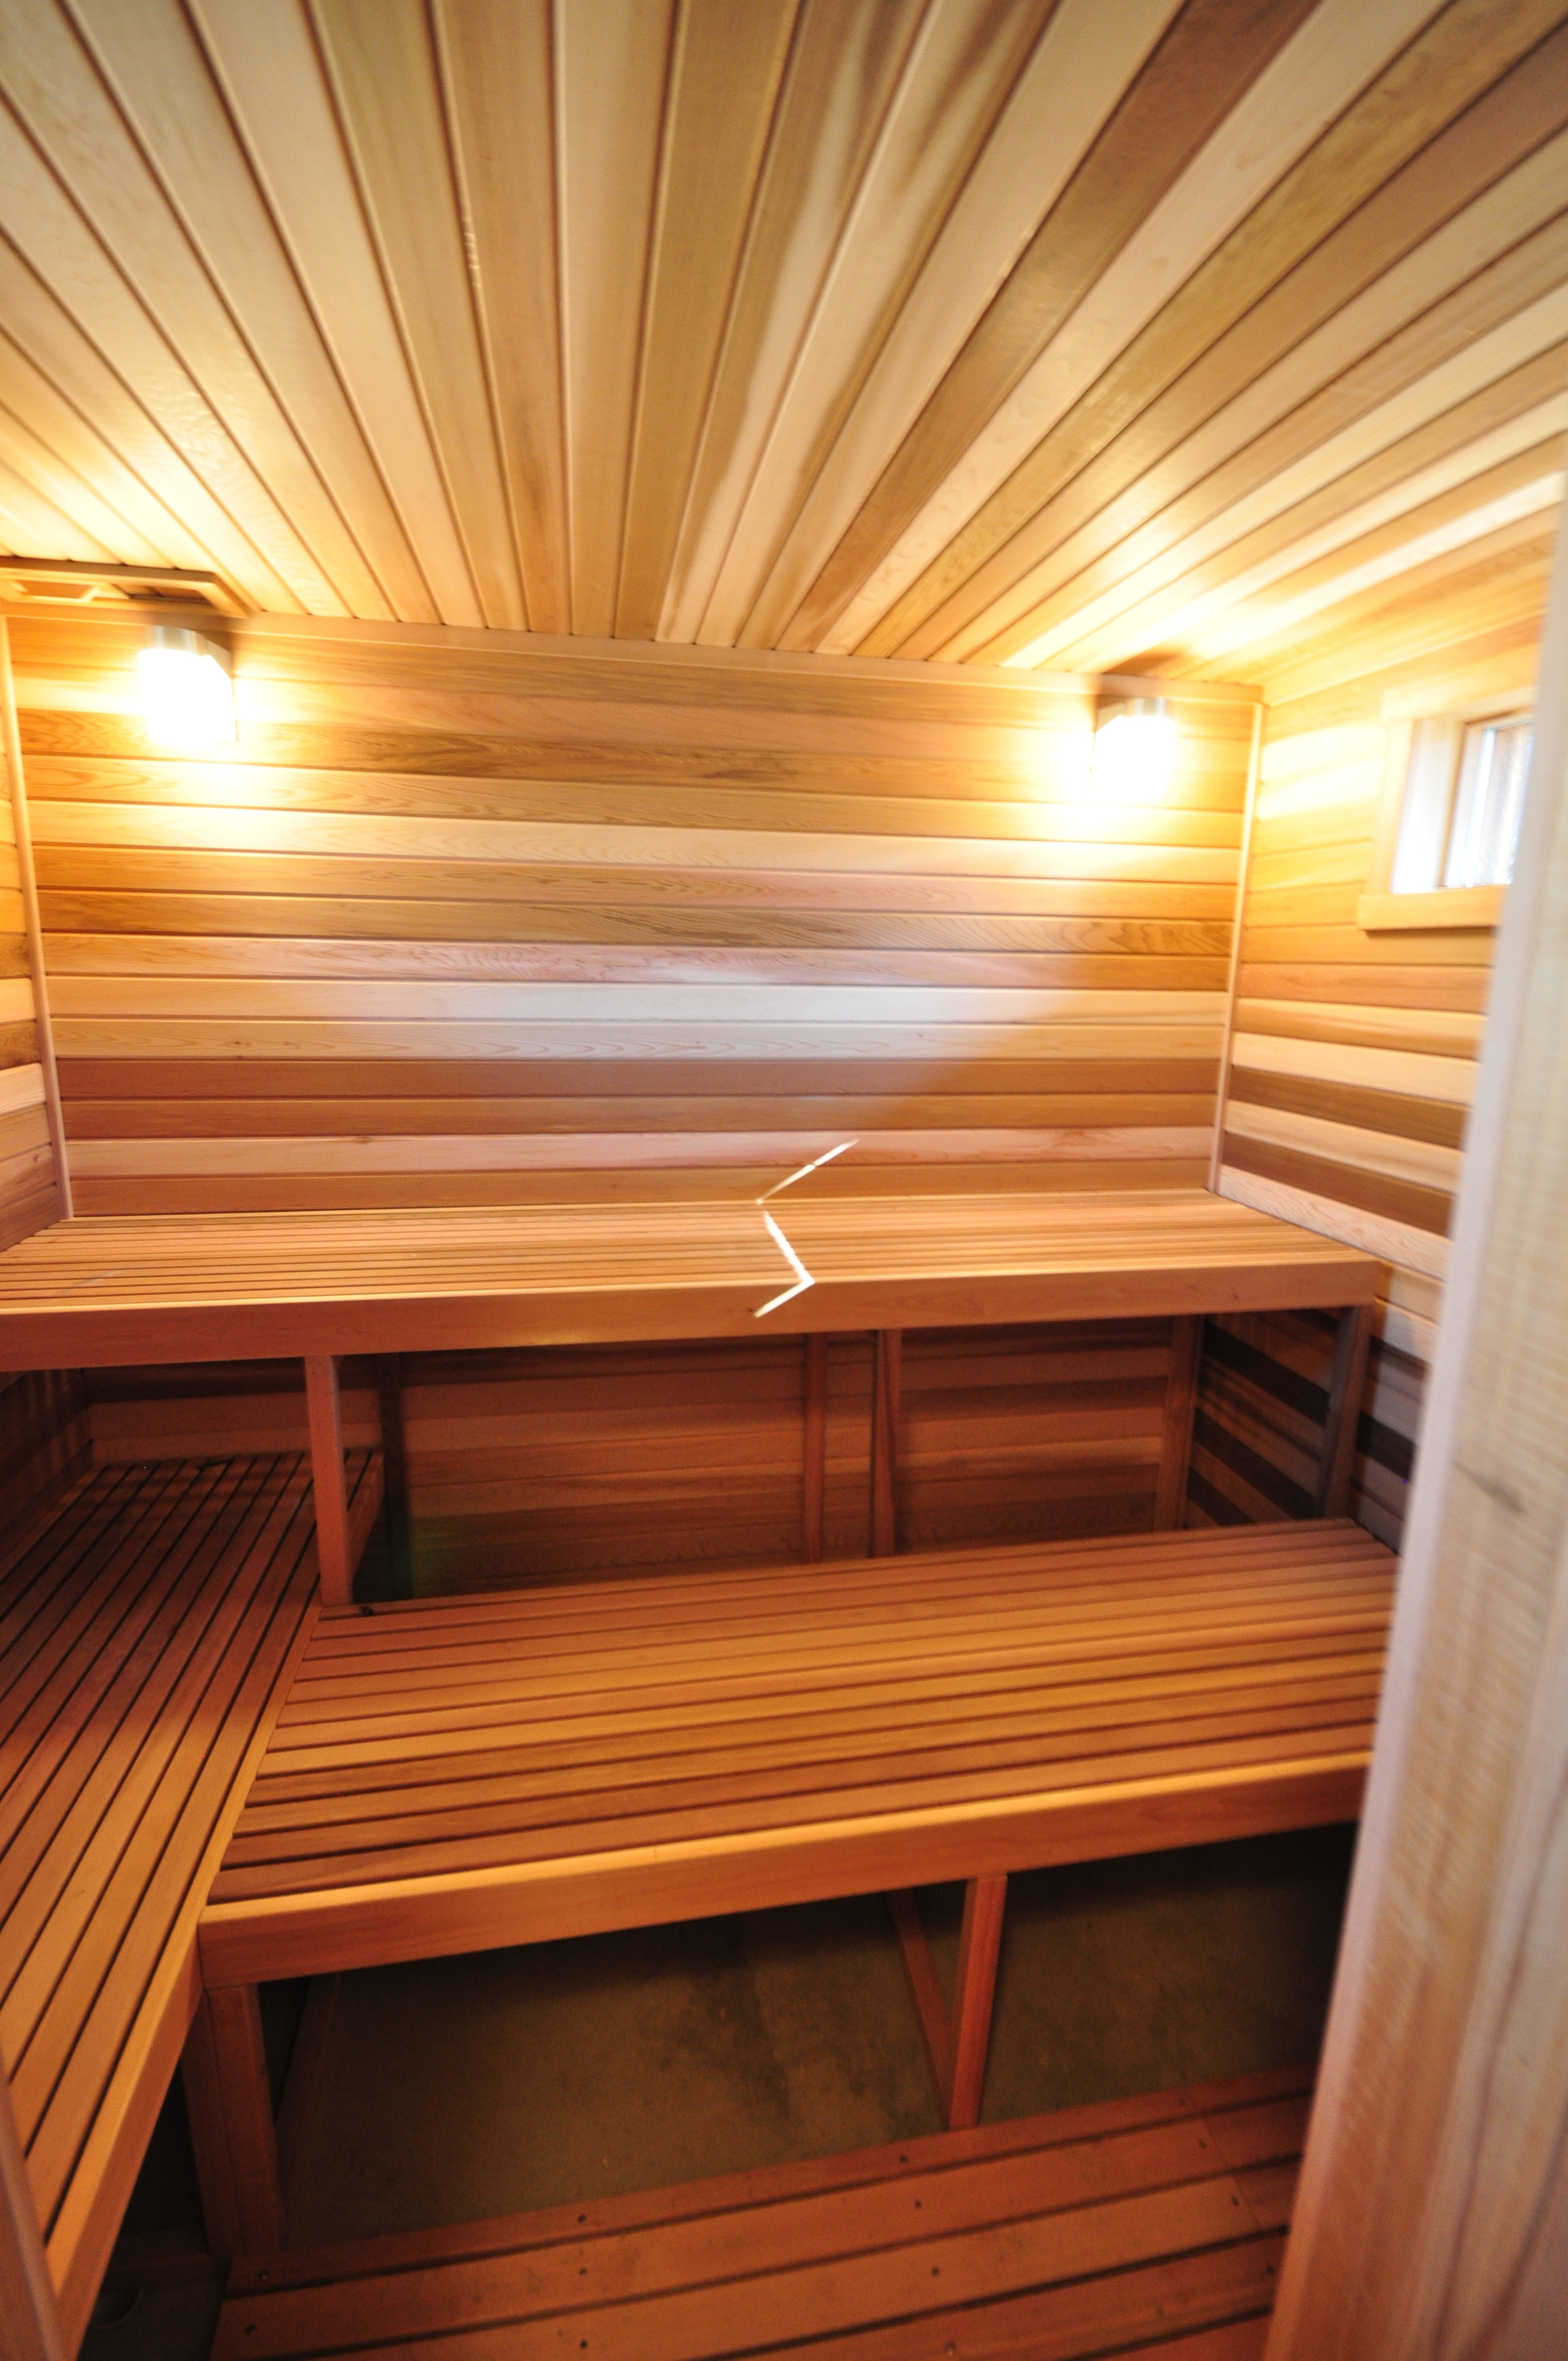 Photo 1939_8079.jpg - 100 cider lined sauna. Heats as a dry or wet sauna.